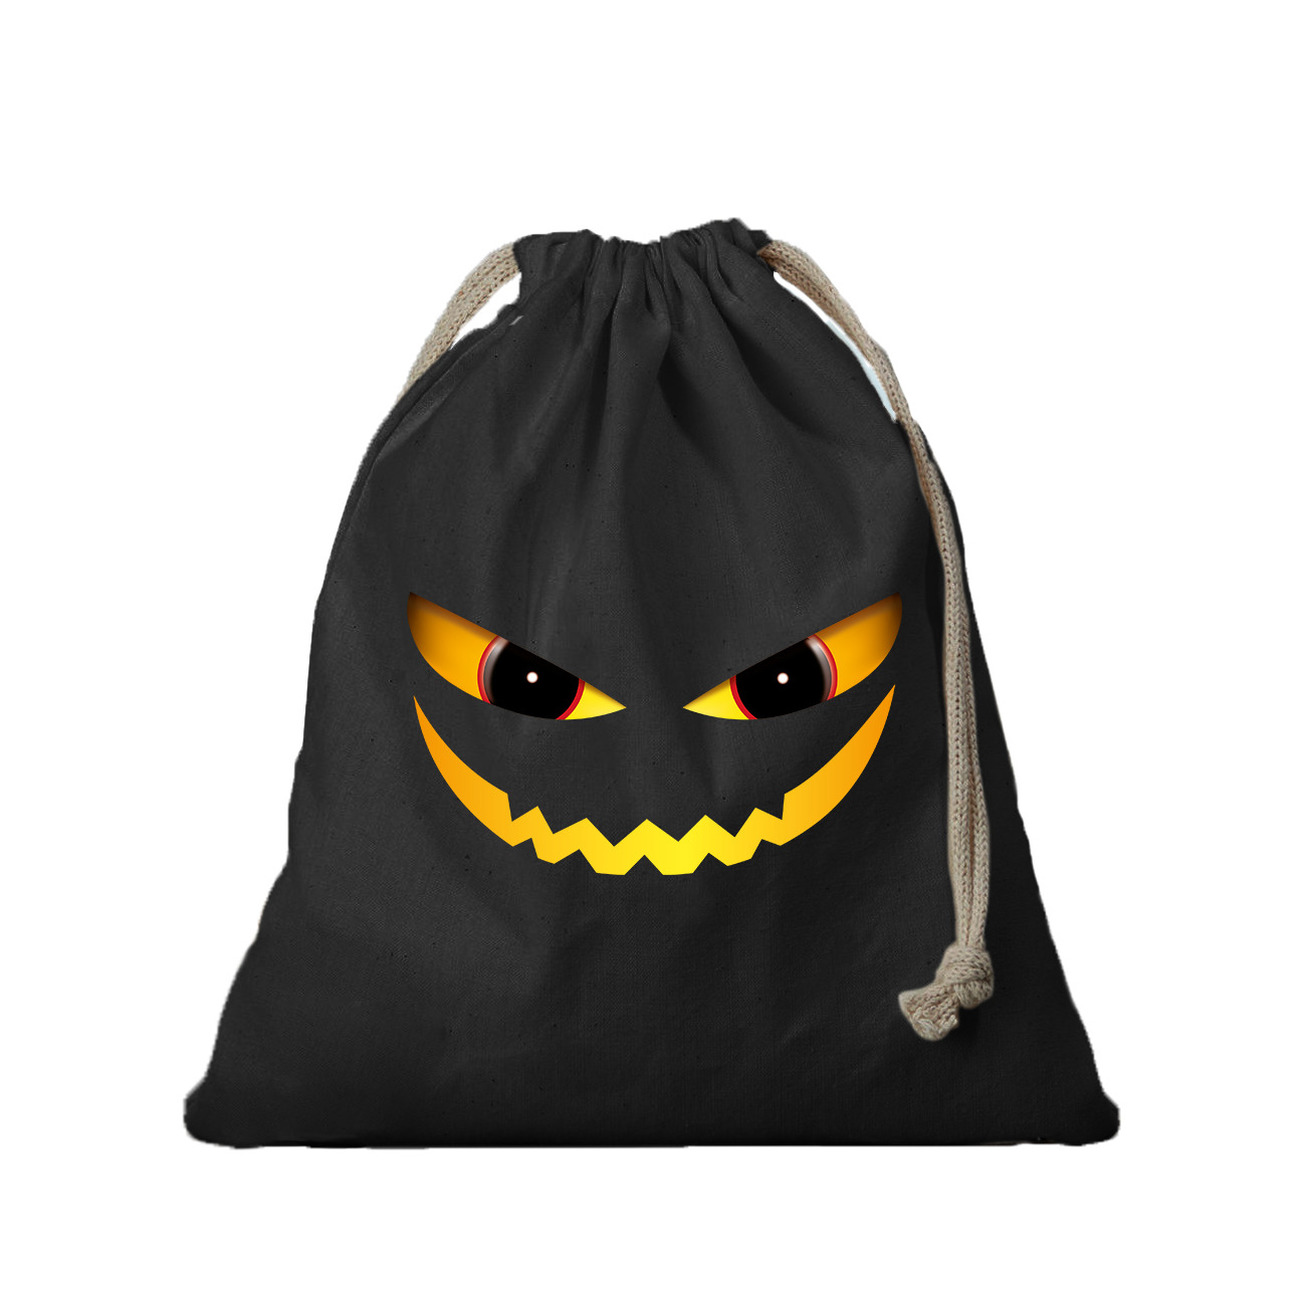 6x Katoenen Halloween snoep tasje duivel gezicht zwart 25 x 30 cm